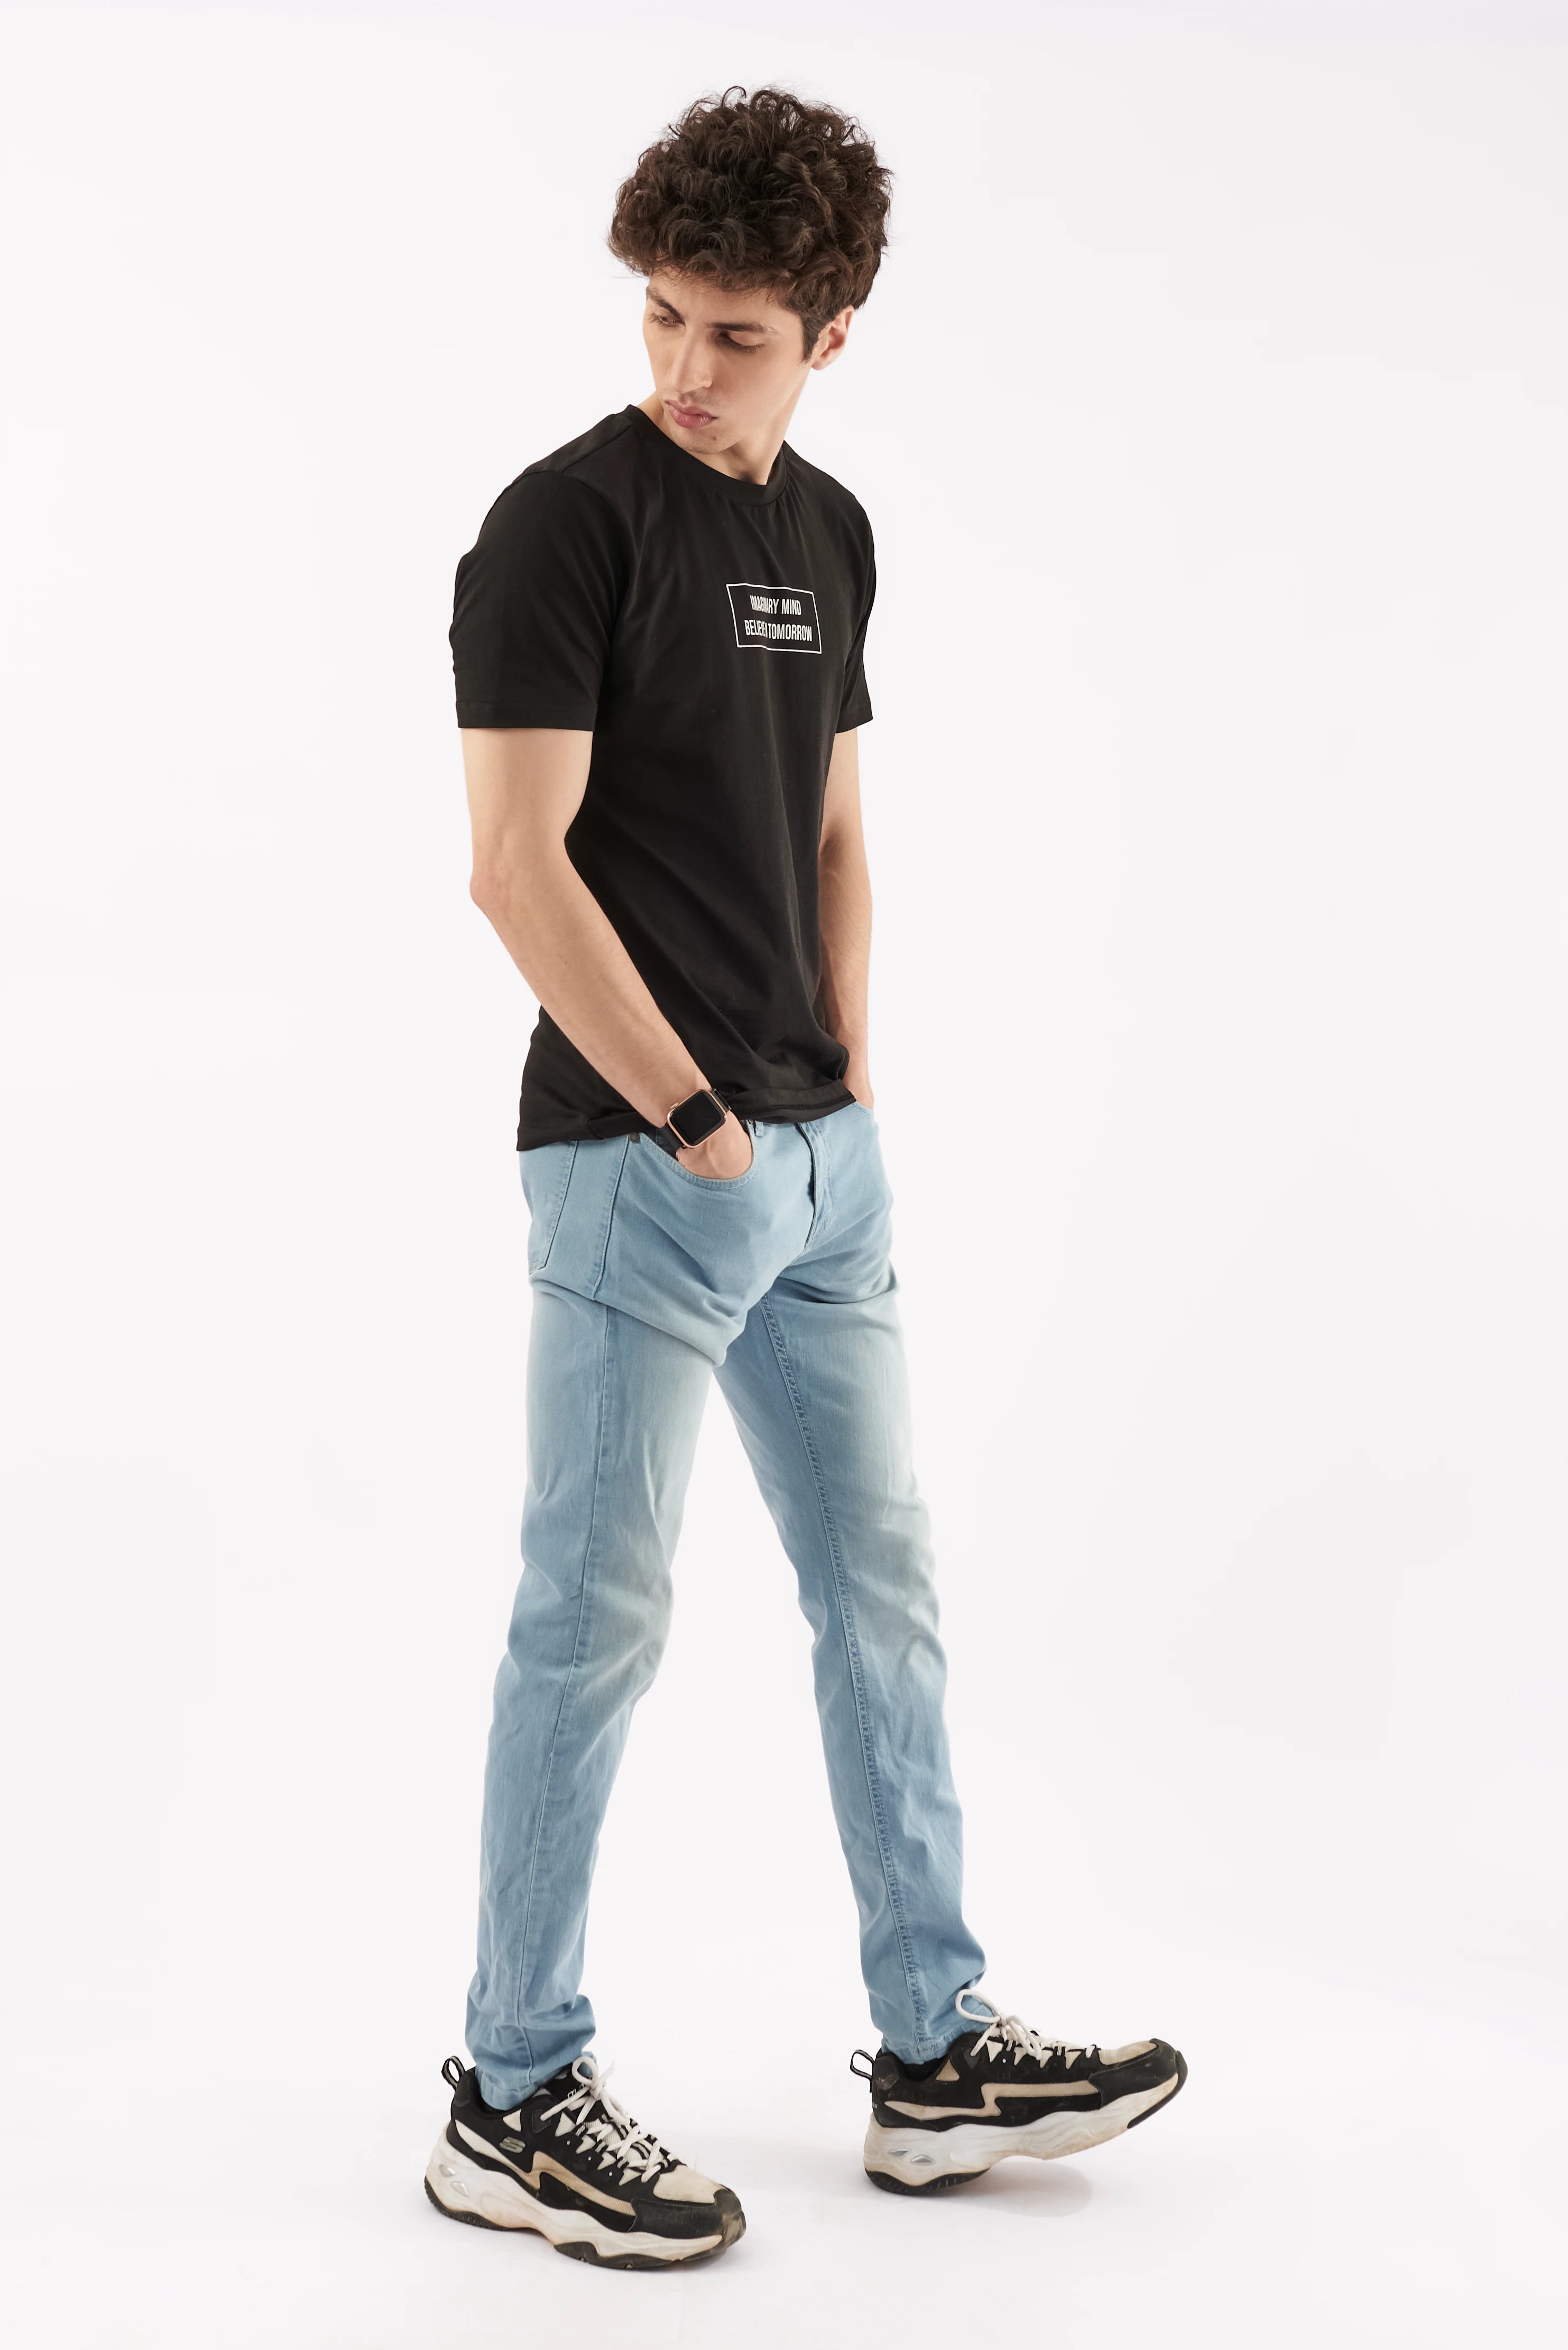 Men's Creative Empowered T-Shirt Black